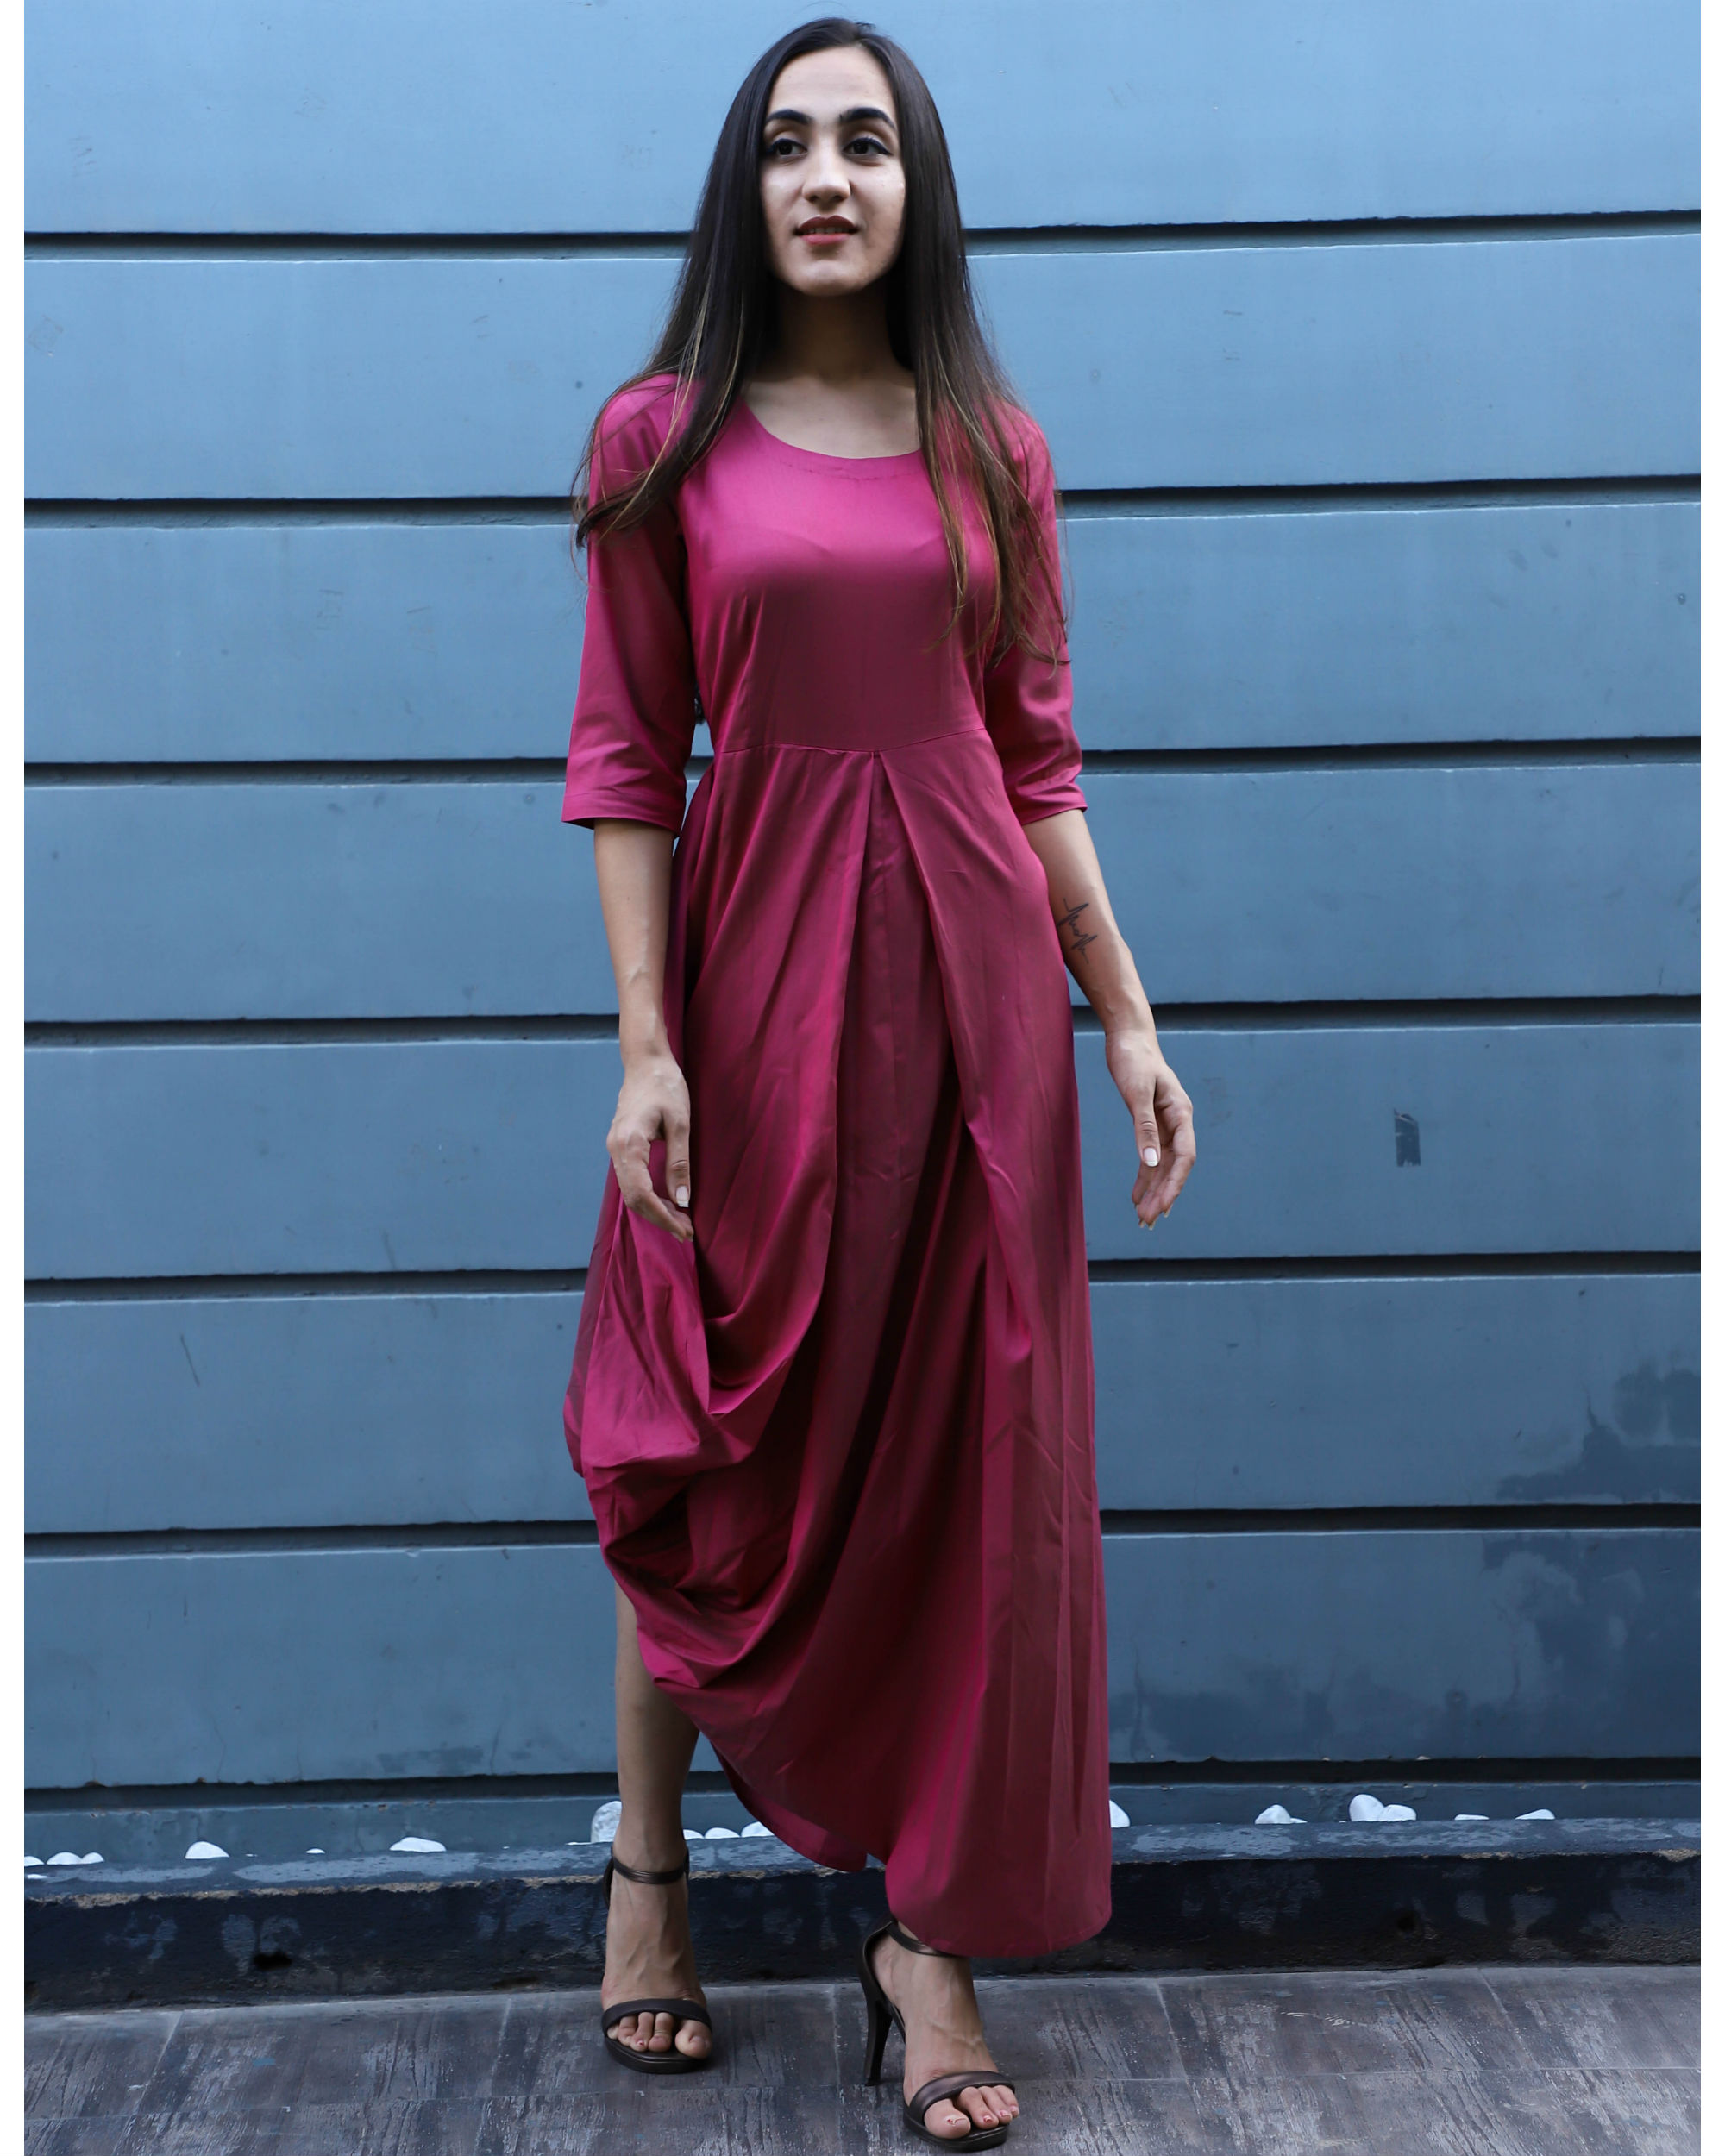 Rouge cowl dress by Kaaj | The Secret Label